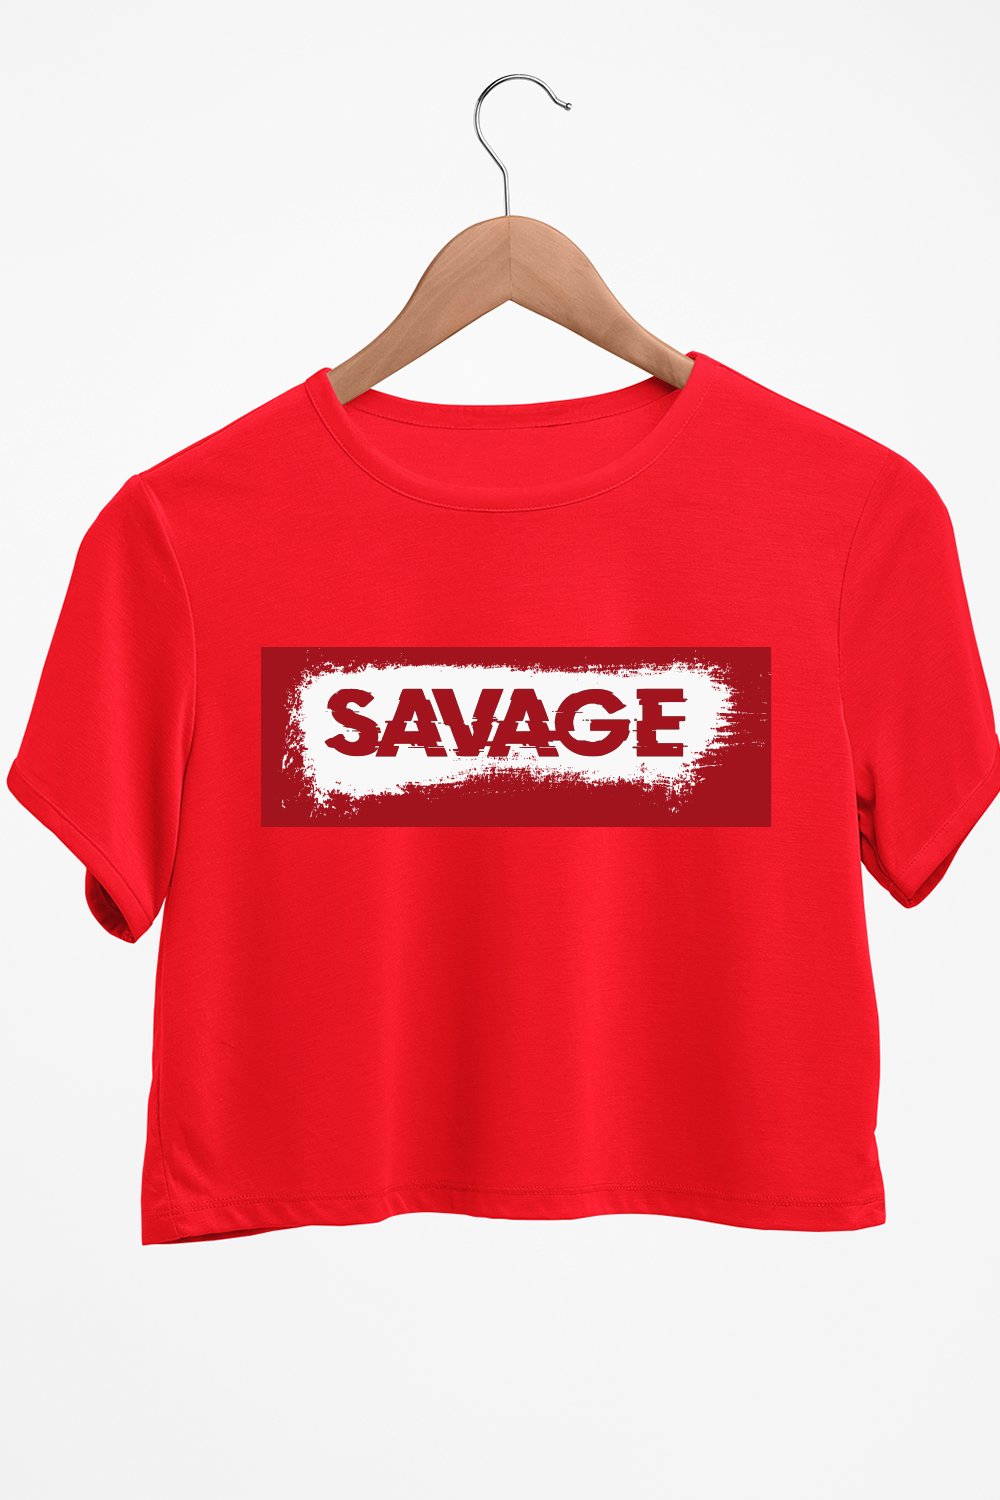 Savage Graphic Printed Red Crop Top